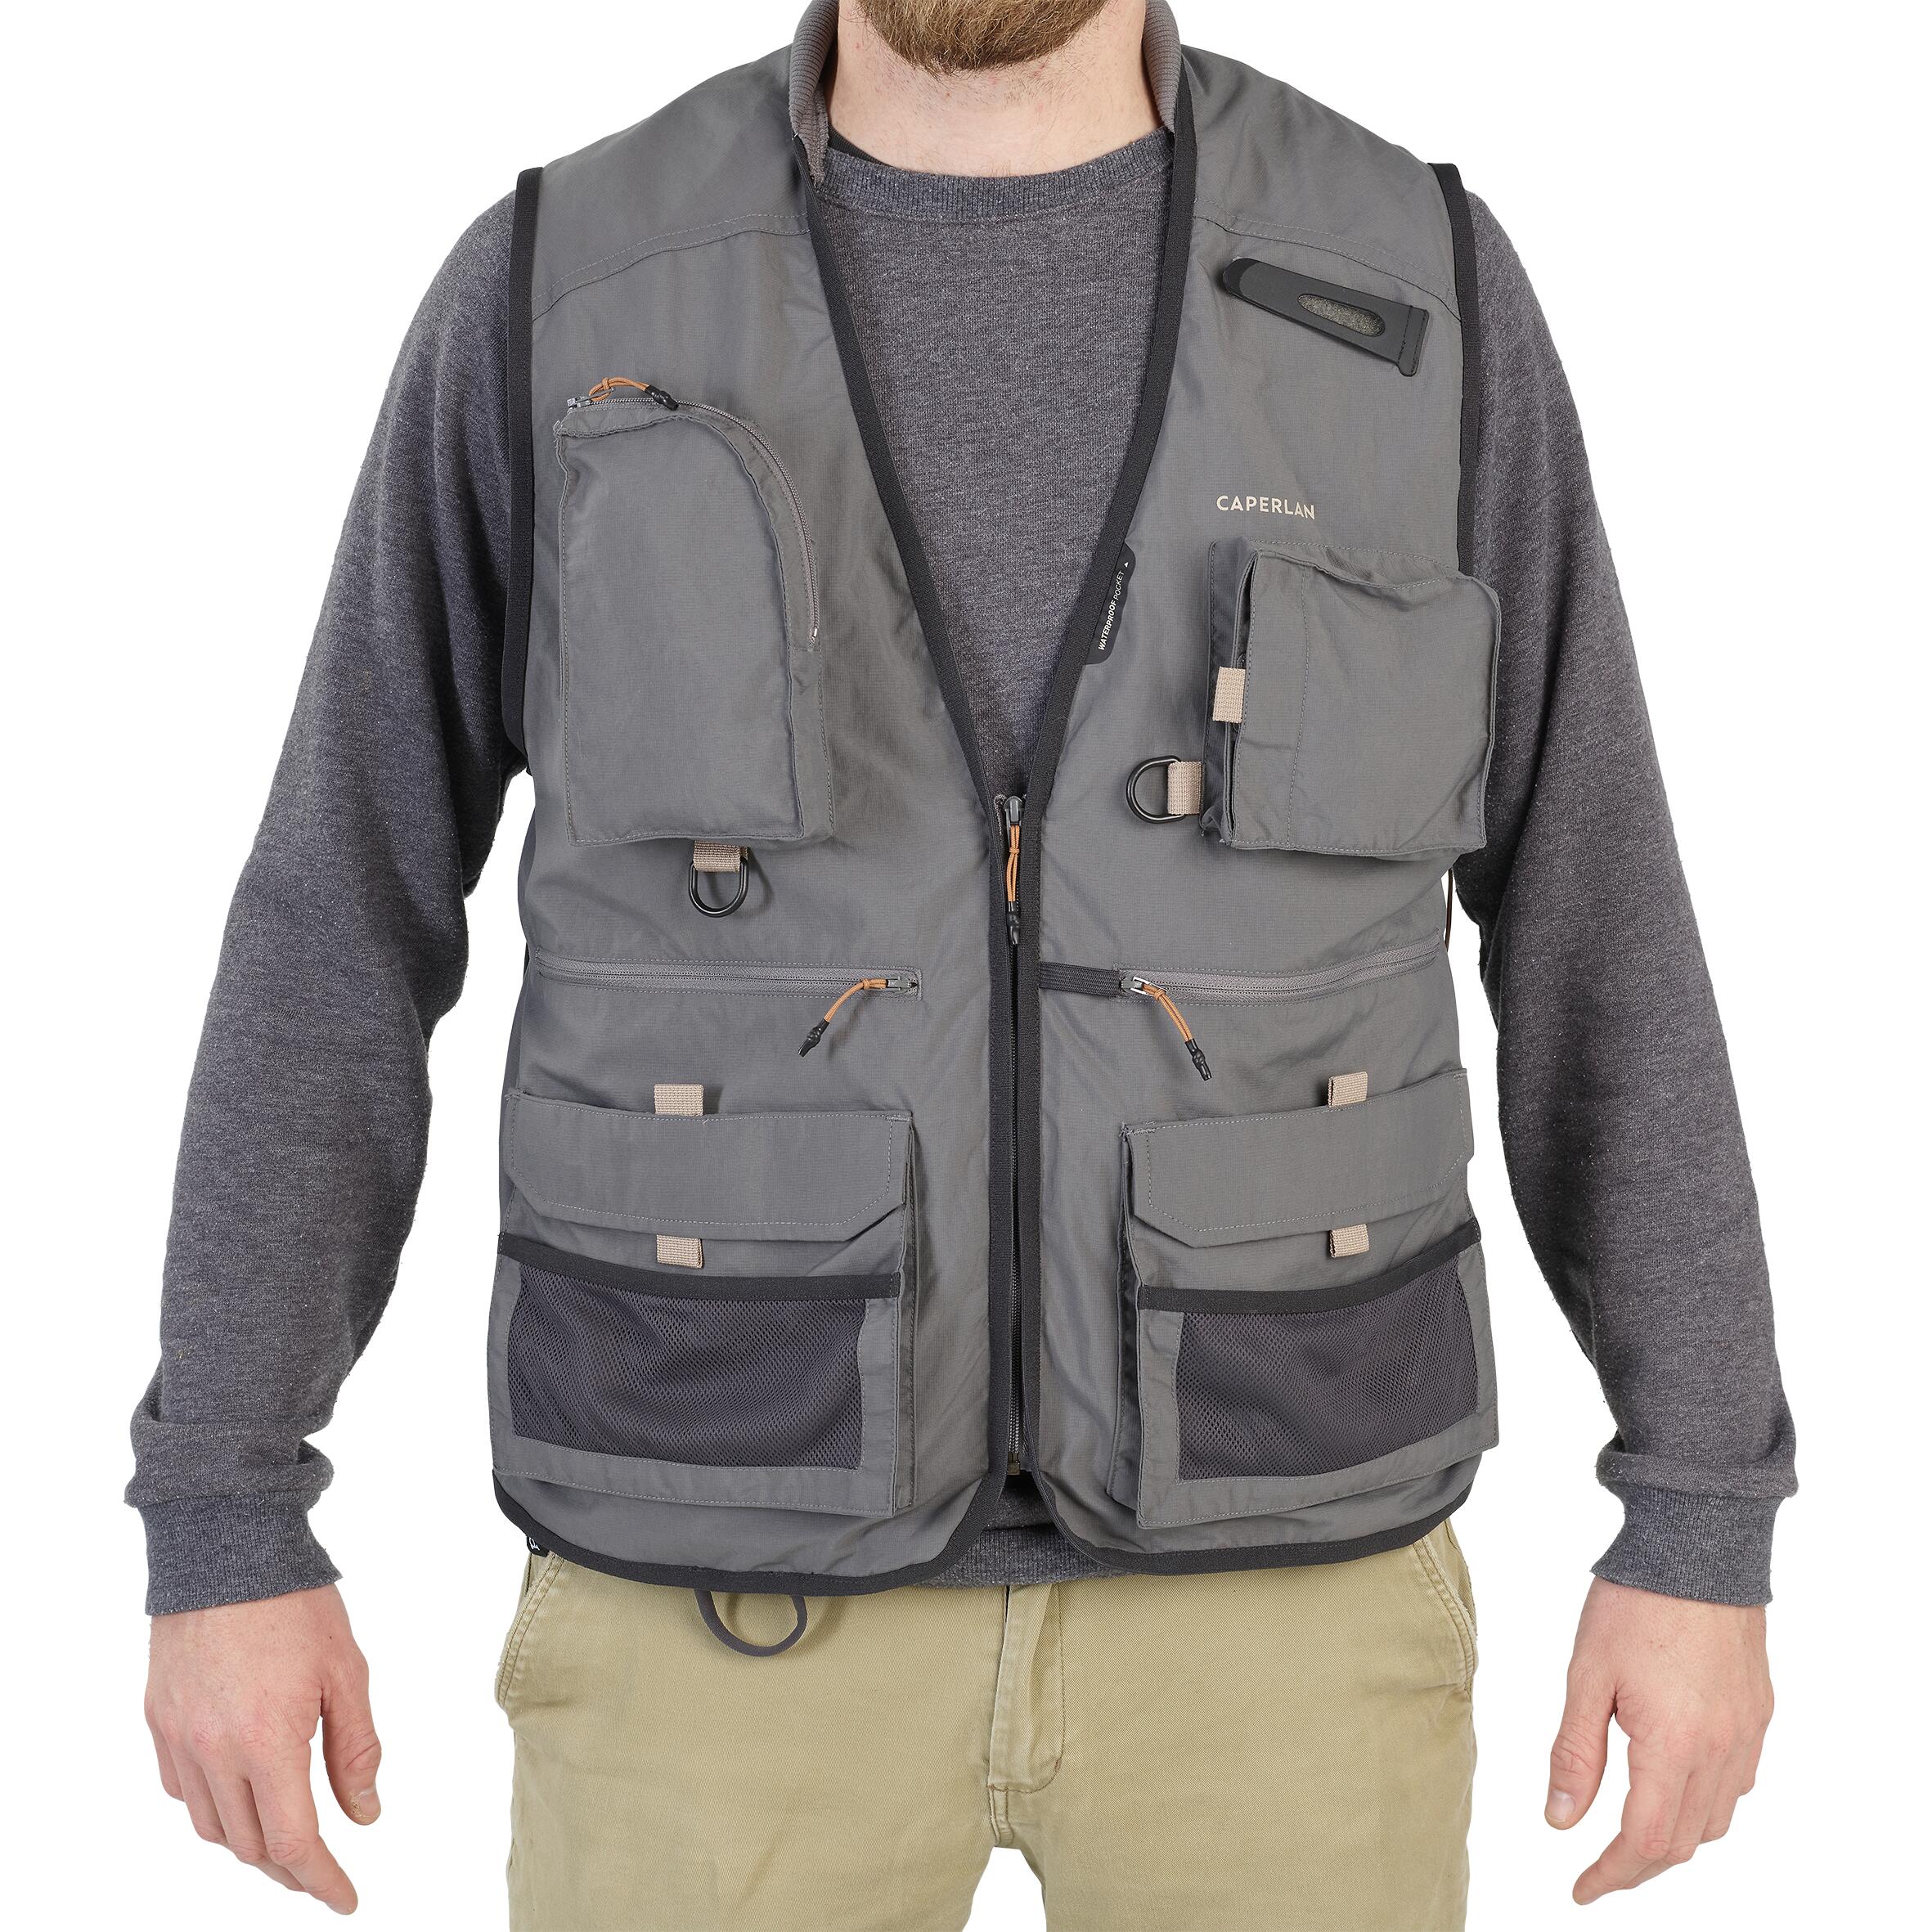 Quest adult Nylon Basic Fishing Angler Life Vest, Men's, Large, Grey